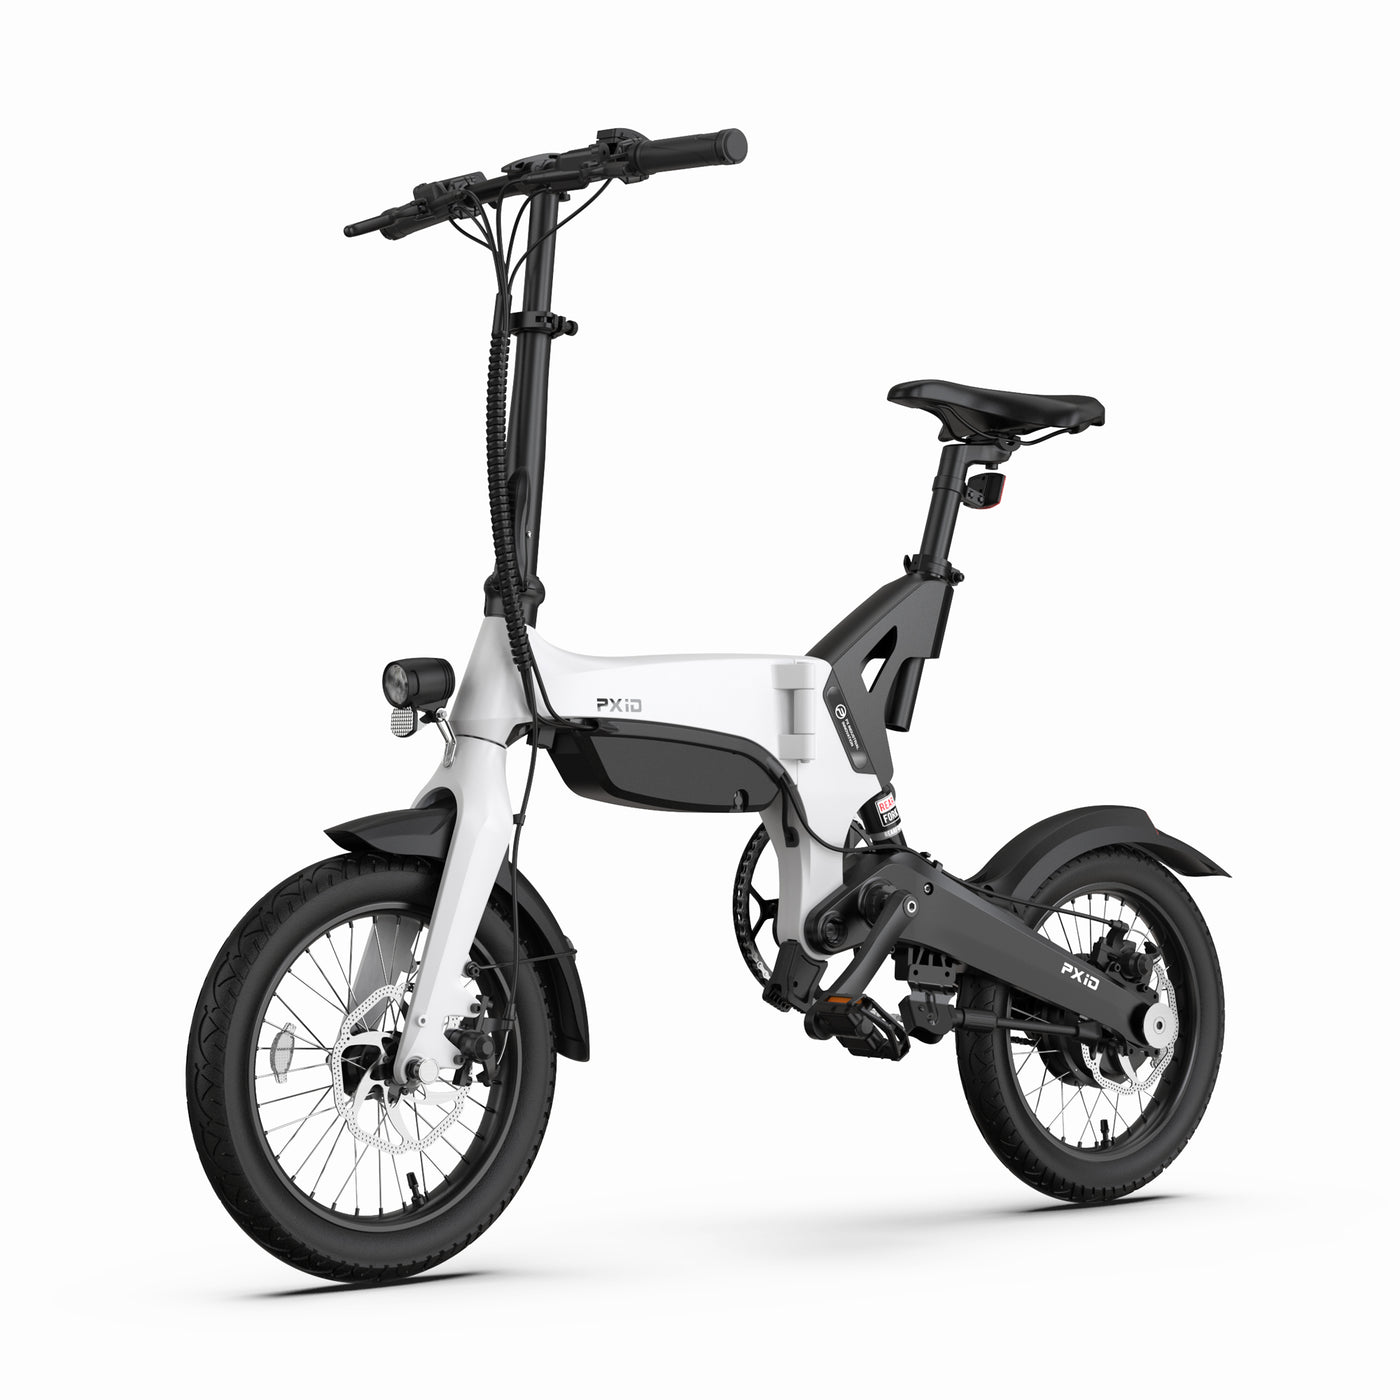 16inch foldable electric bike